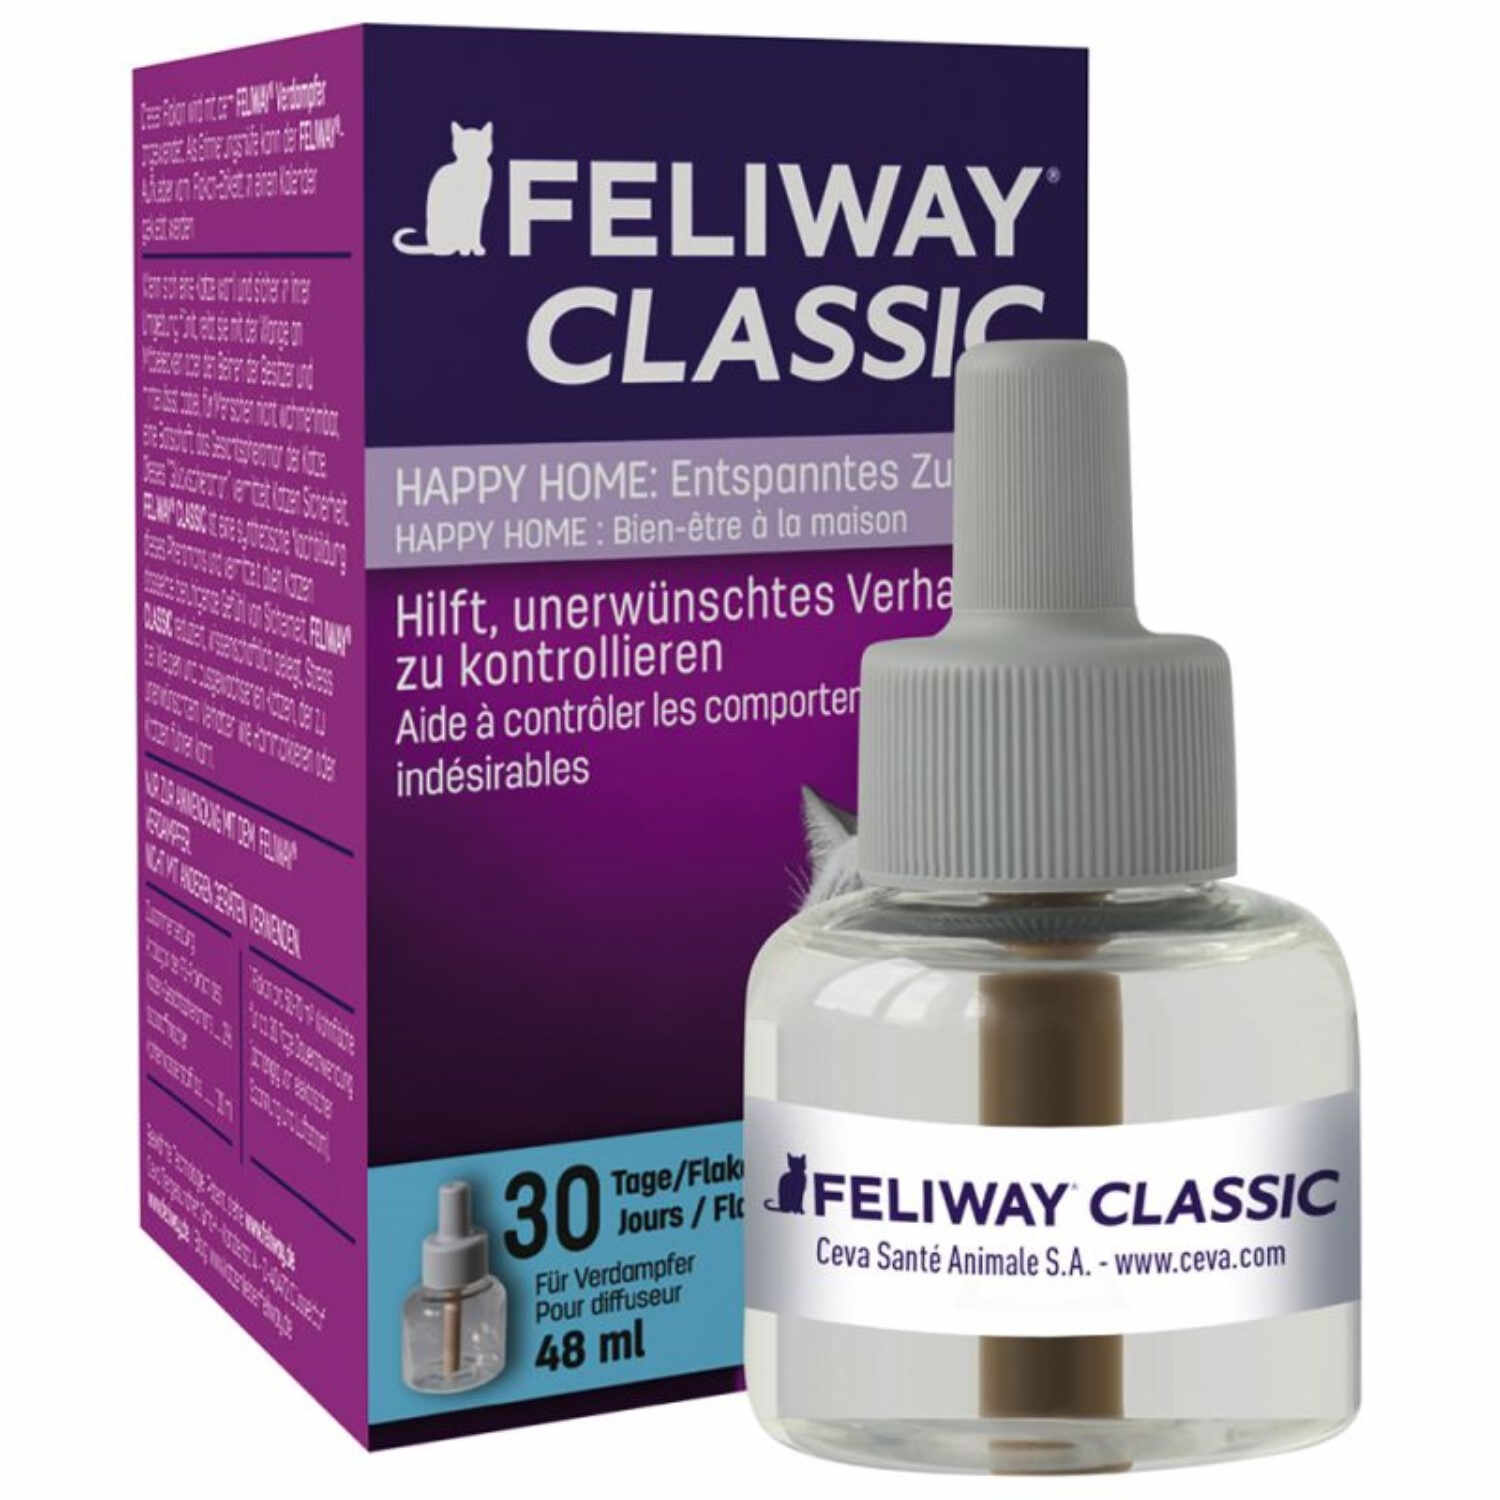 Feliway Classic, Reverva pentru Difuser Antistress pisici 1 X 48 ml